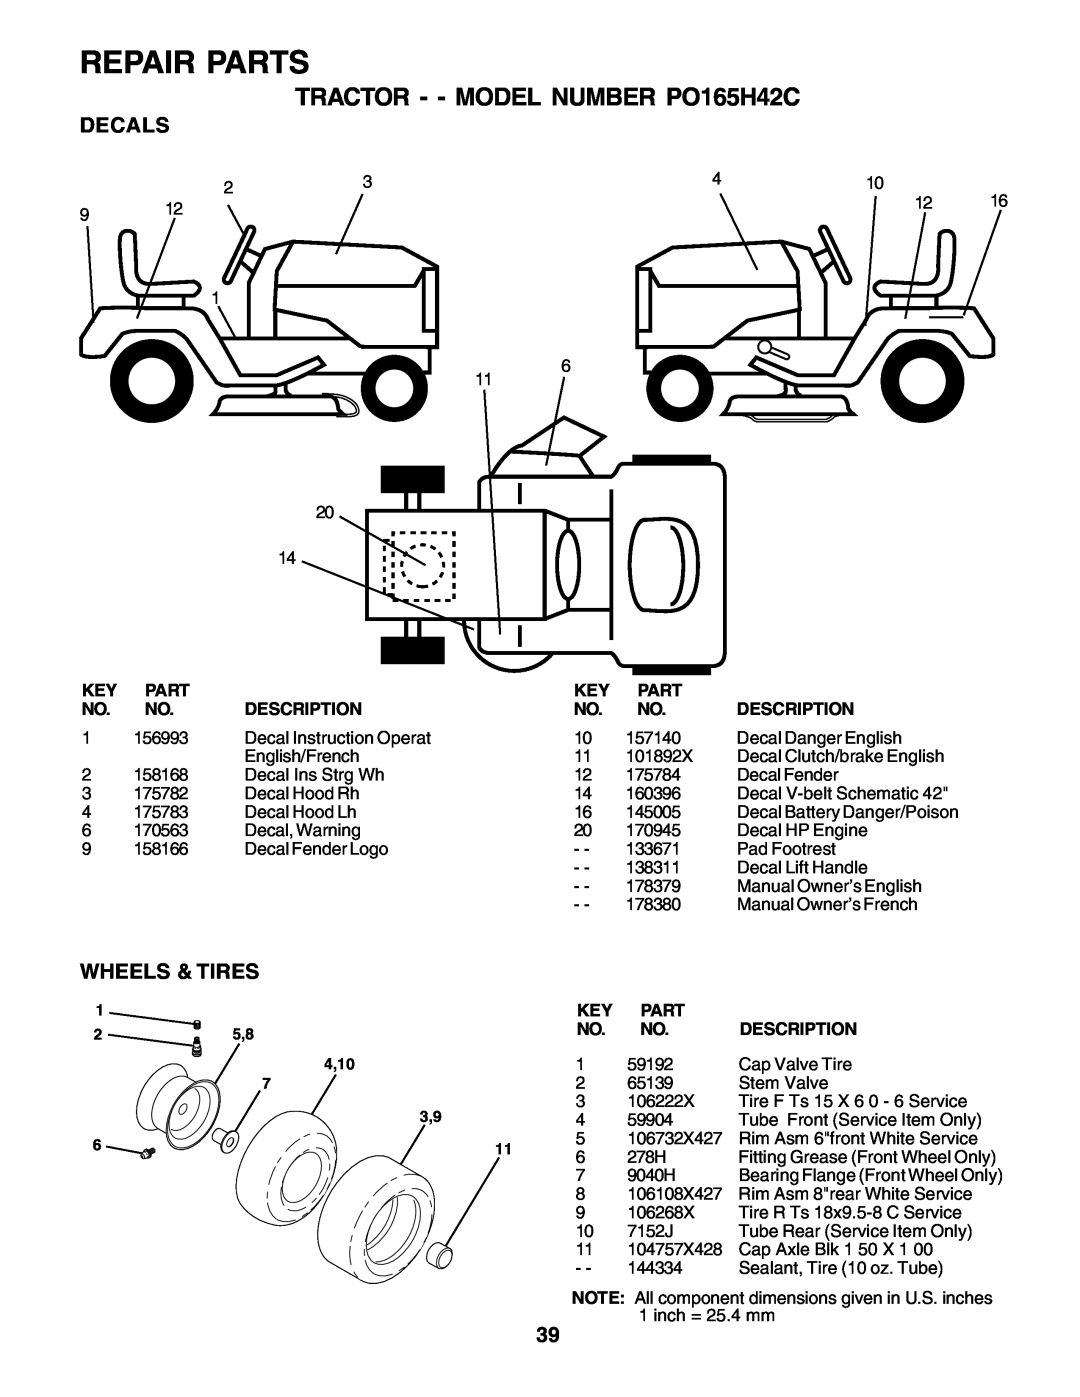 Poulan 178379 owner manual Decals, Wheels & Tires, Repair Parts, TRACTOR - - MODEL NUMBER PO165H42C, Description 